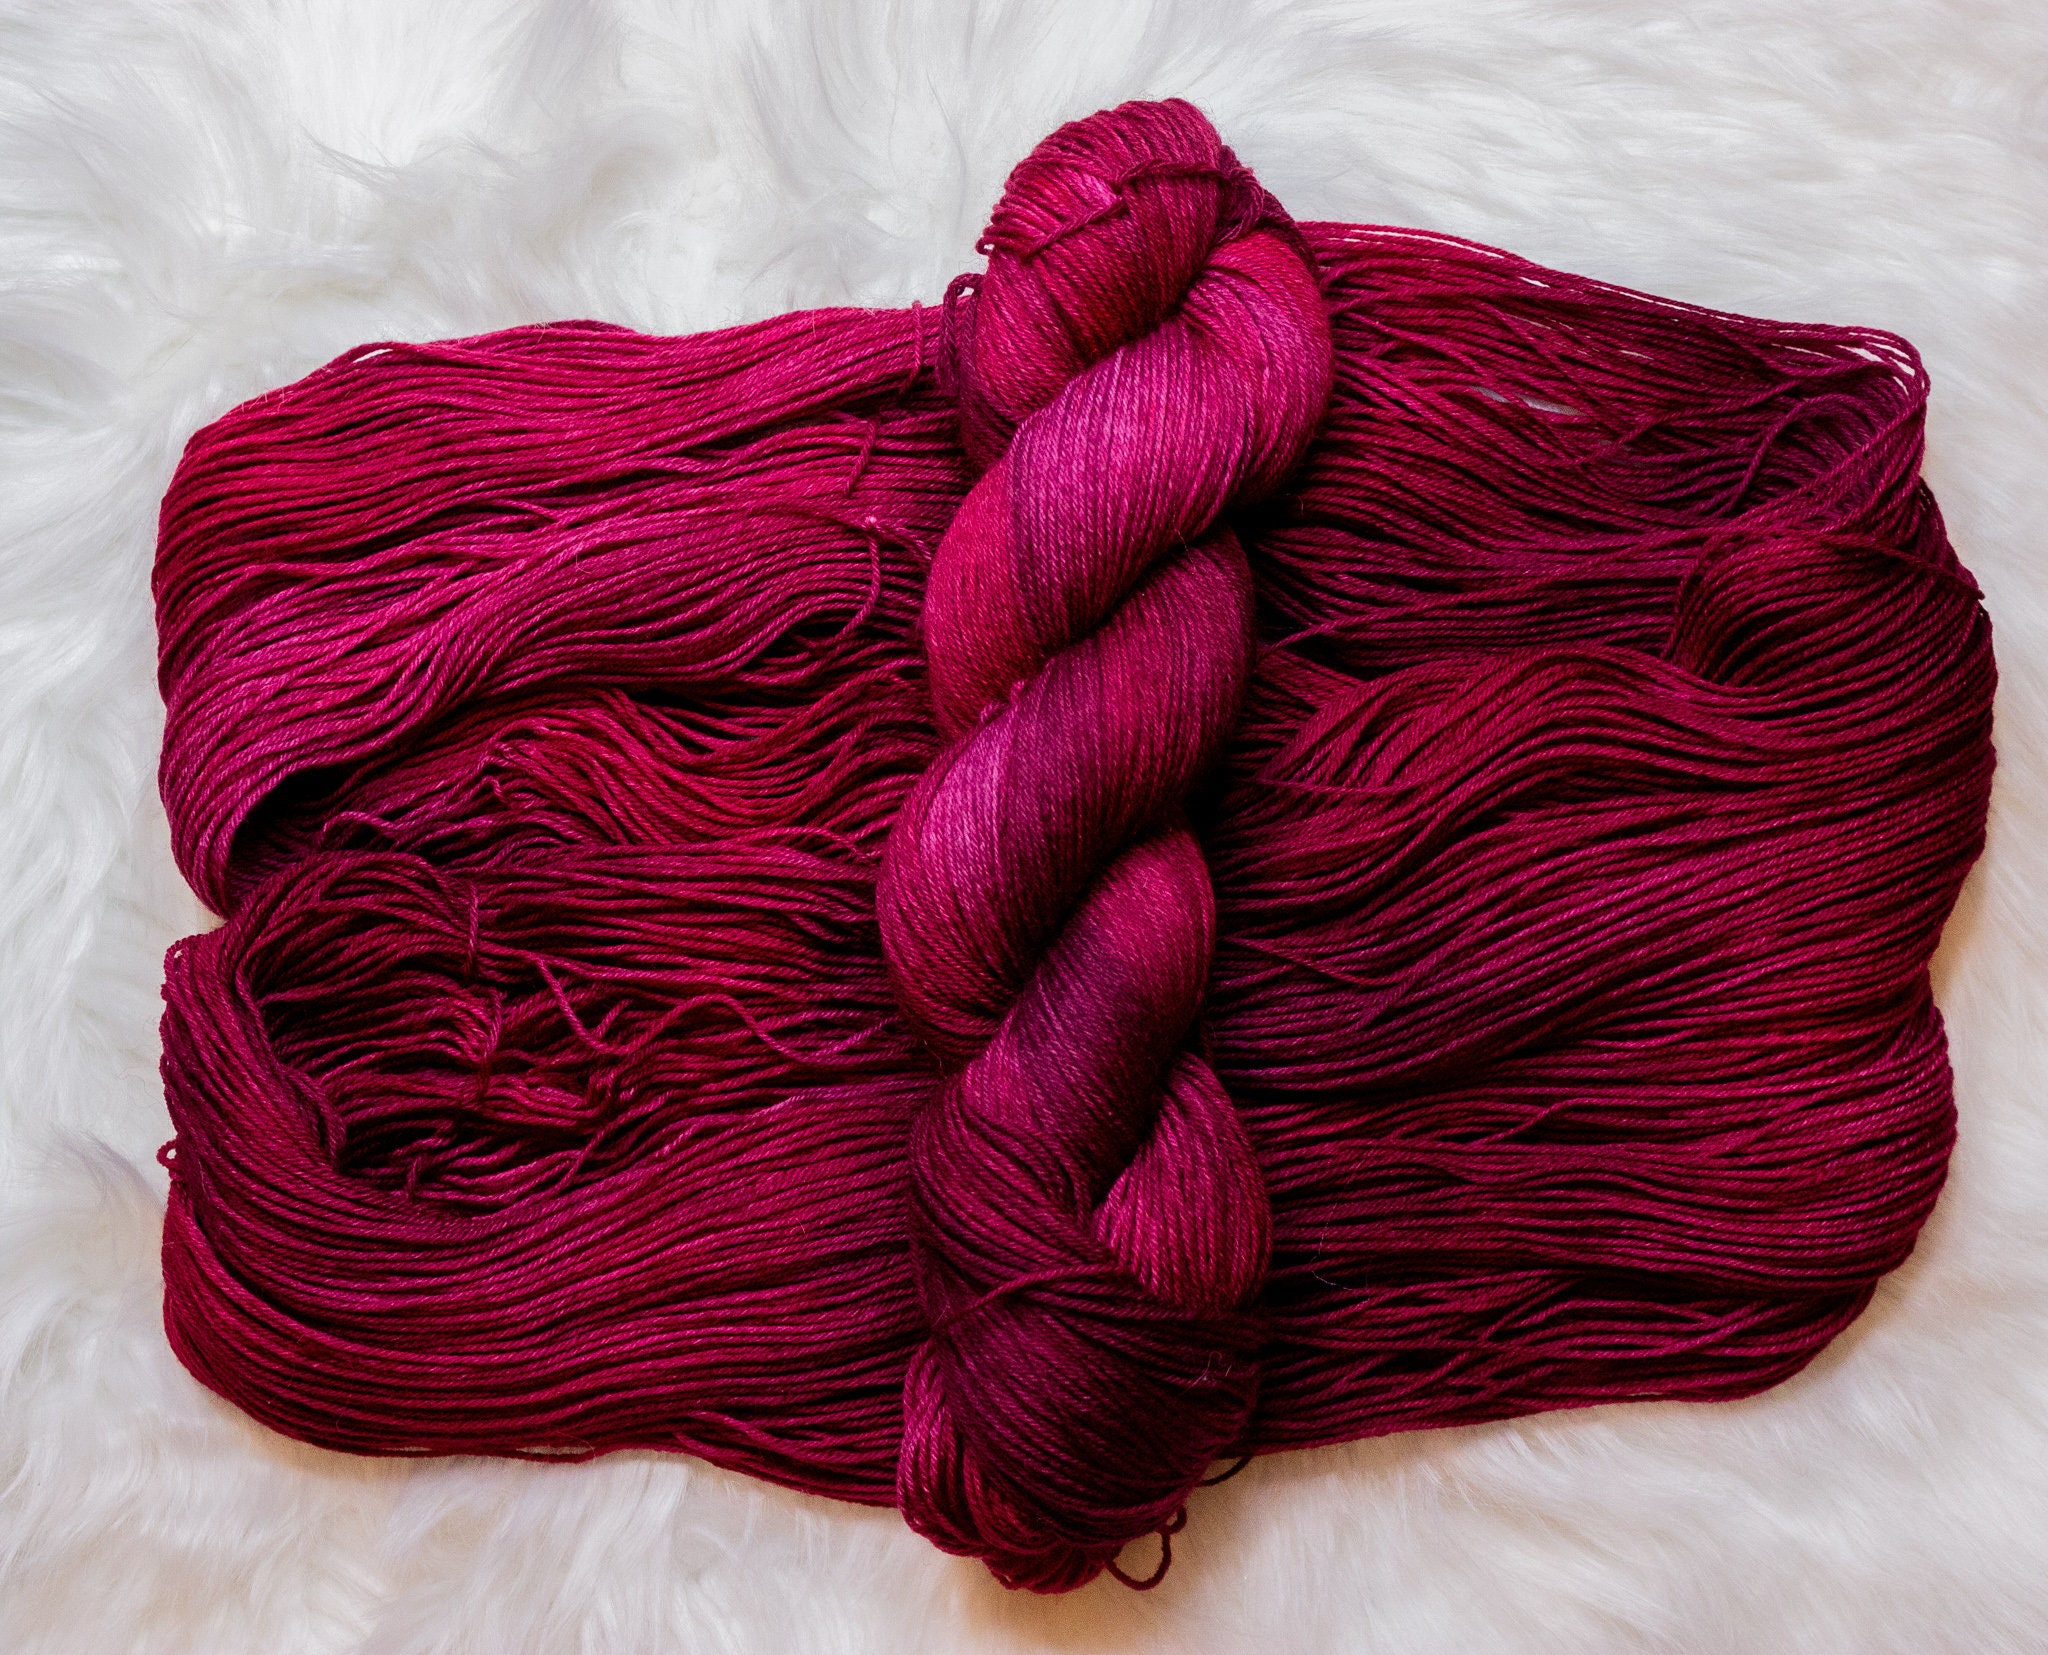 Hand-Dyed Yarn 151 “Proglacial”